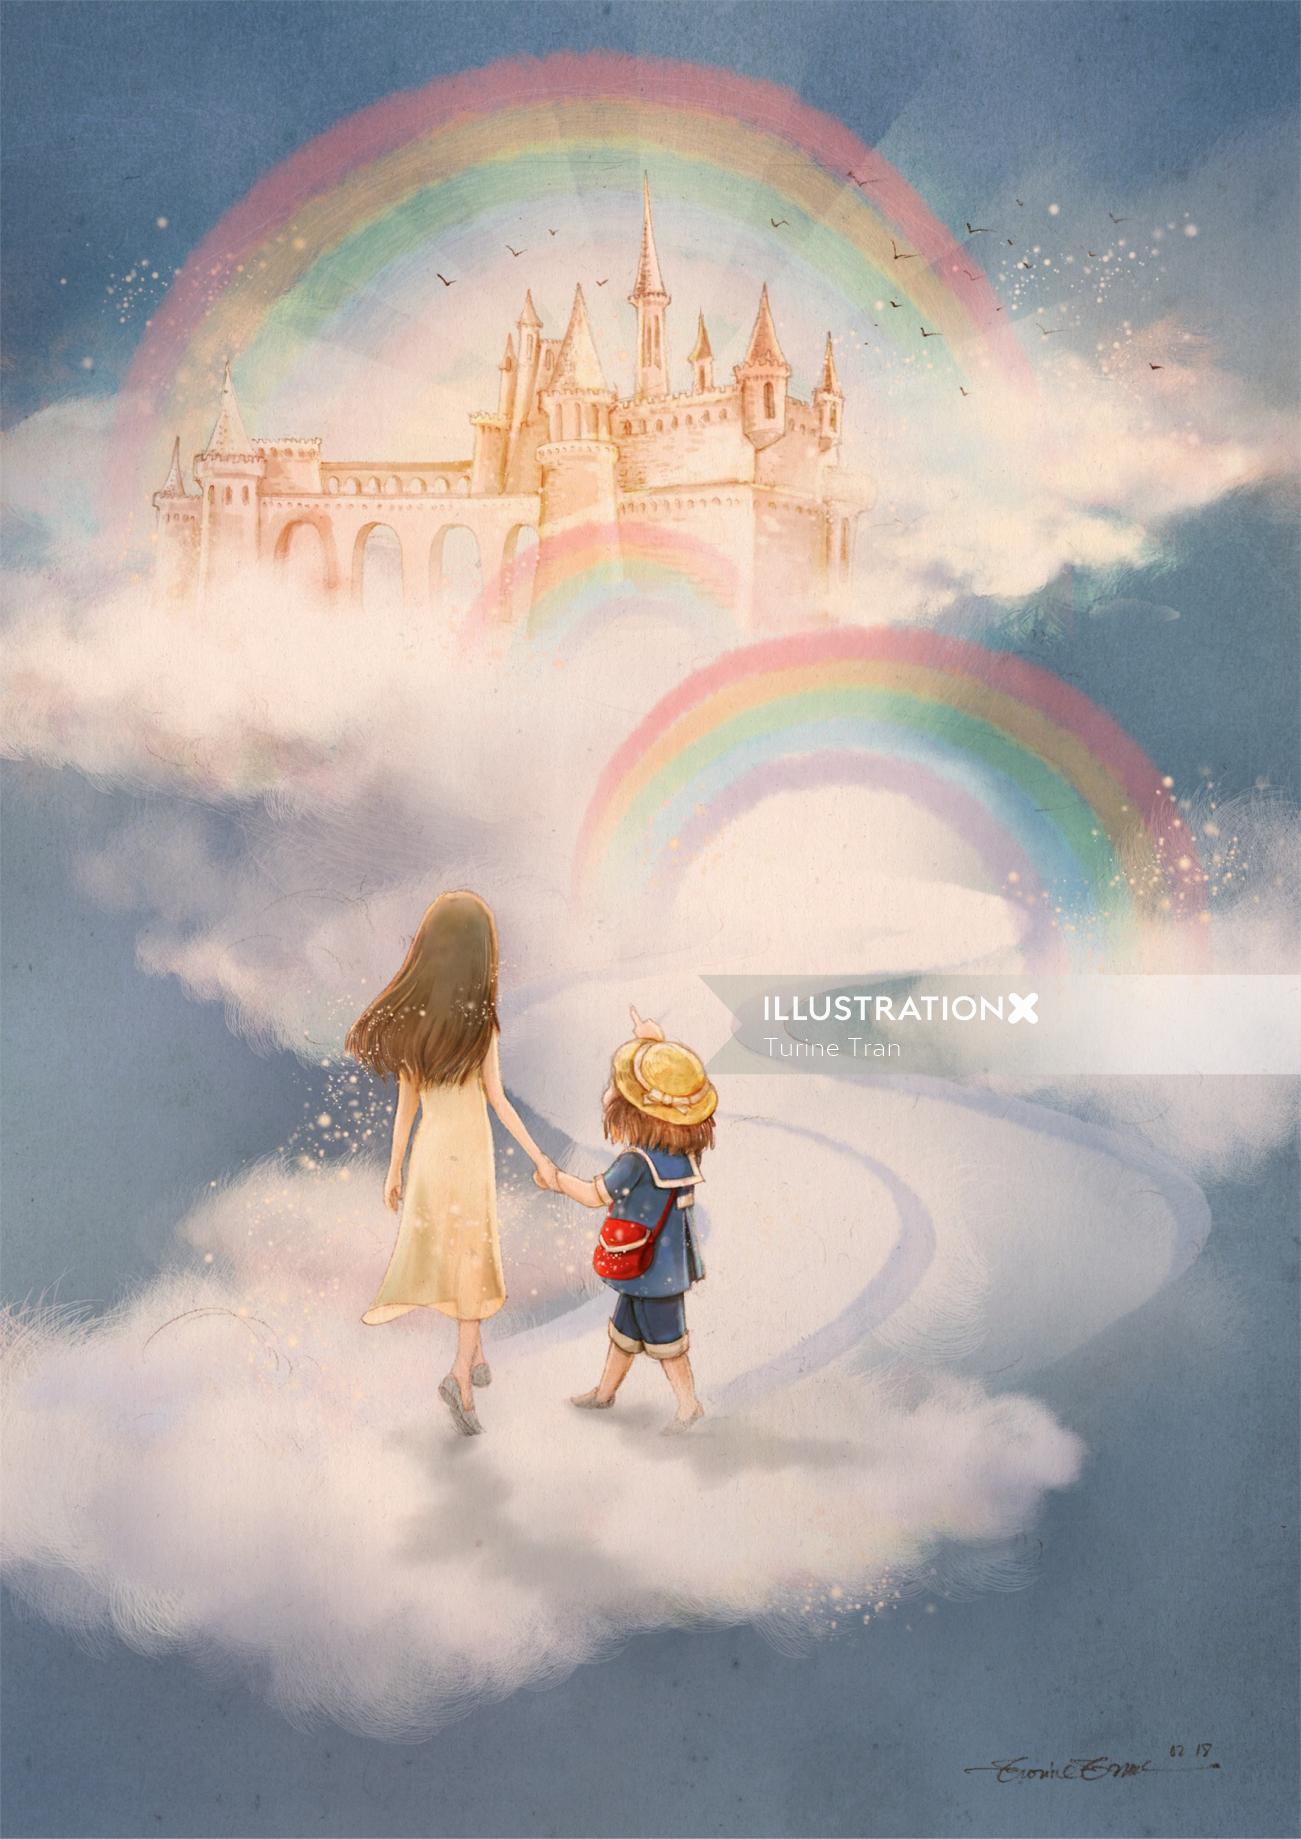 Fantasy kids to rainbow castle
